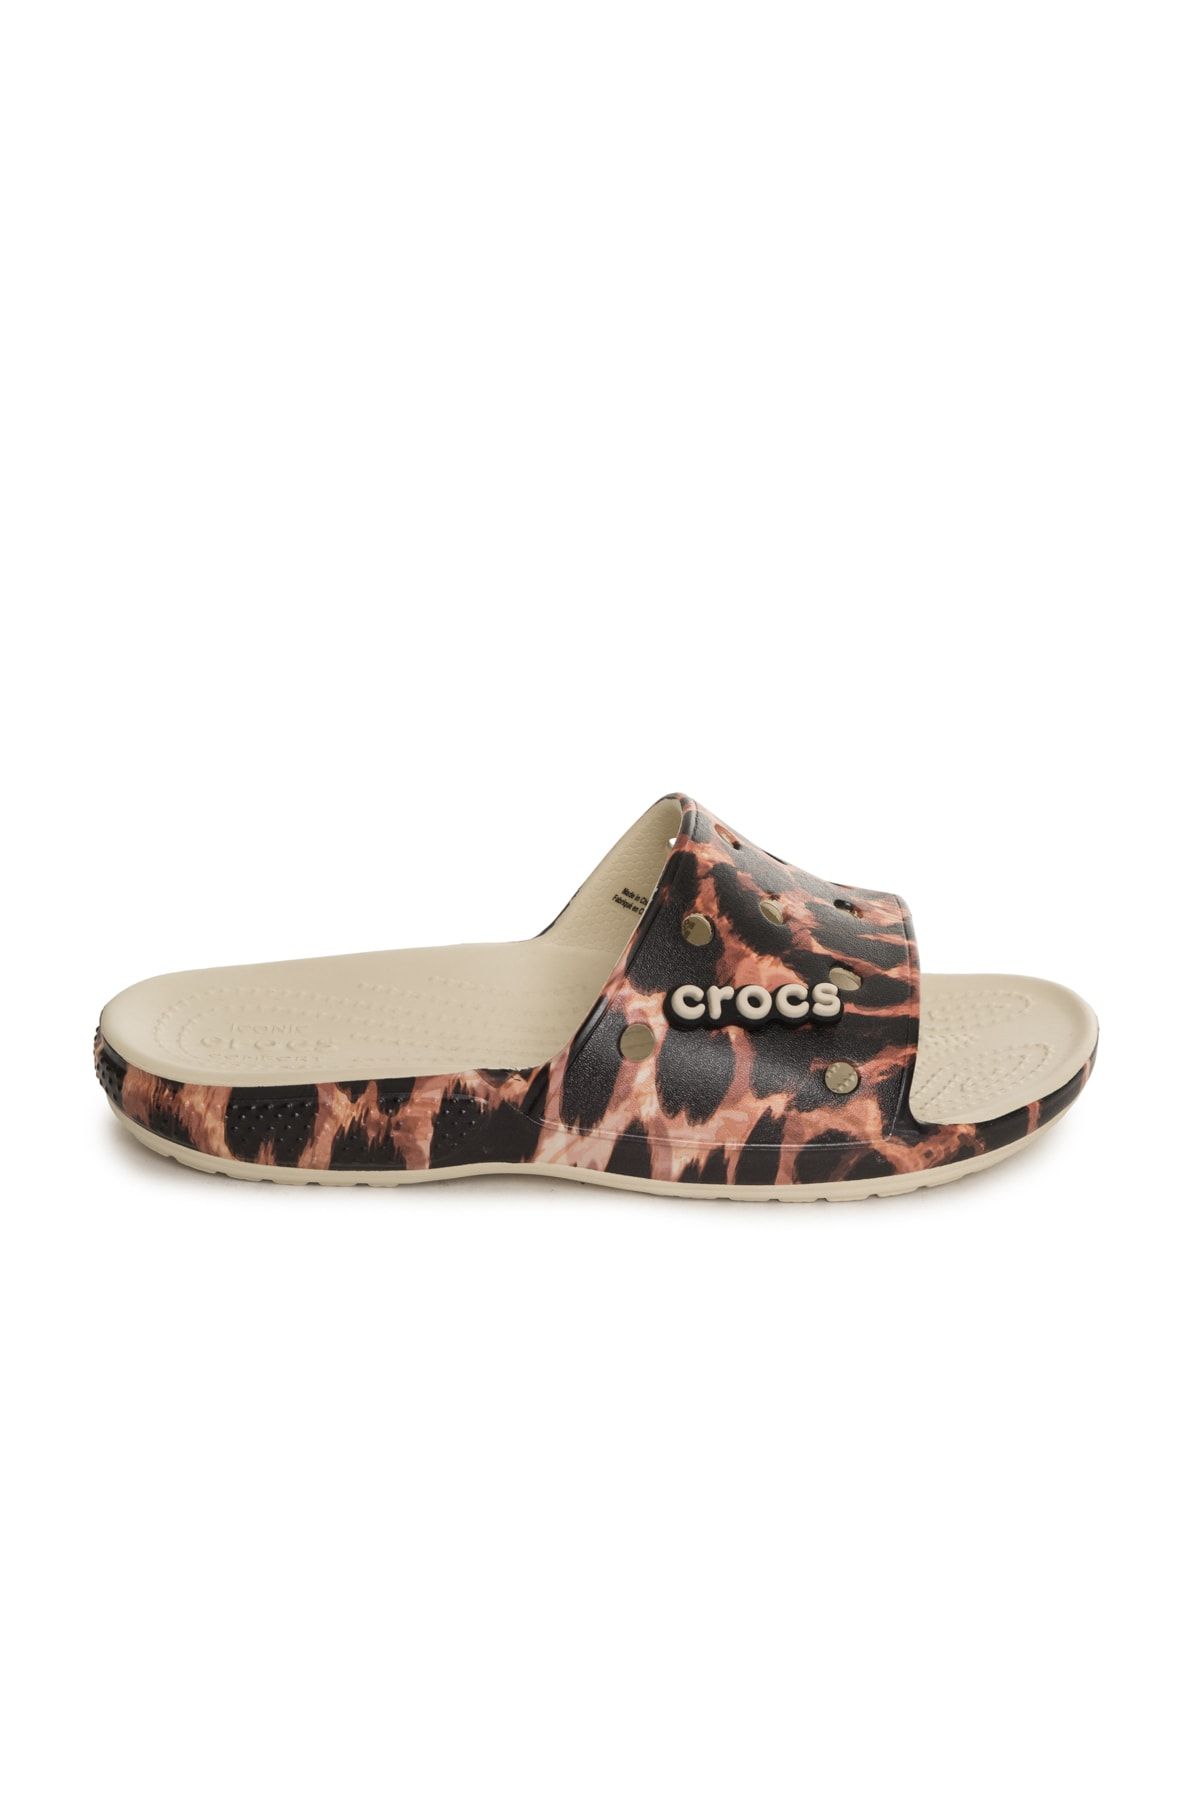 Crocs CR207841 Terlik BONE LEOPARD